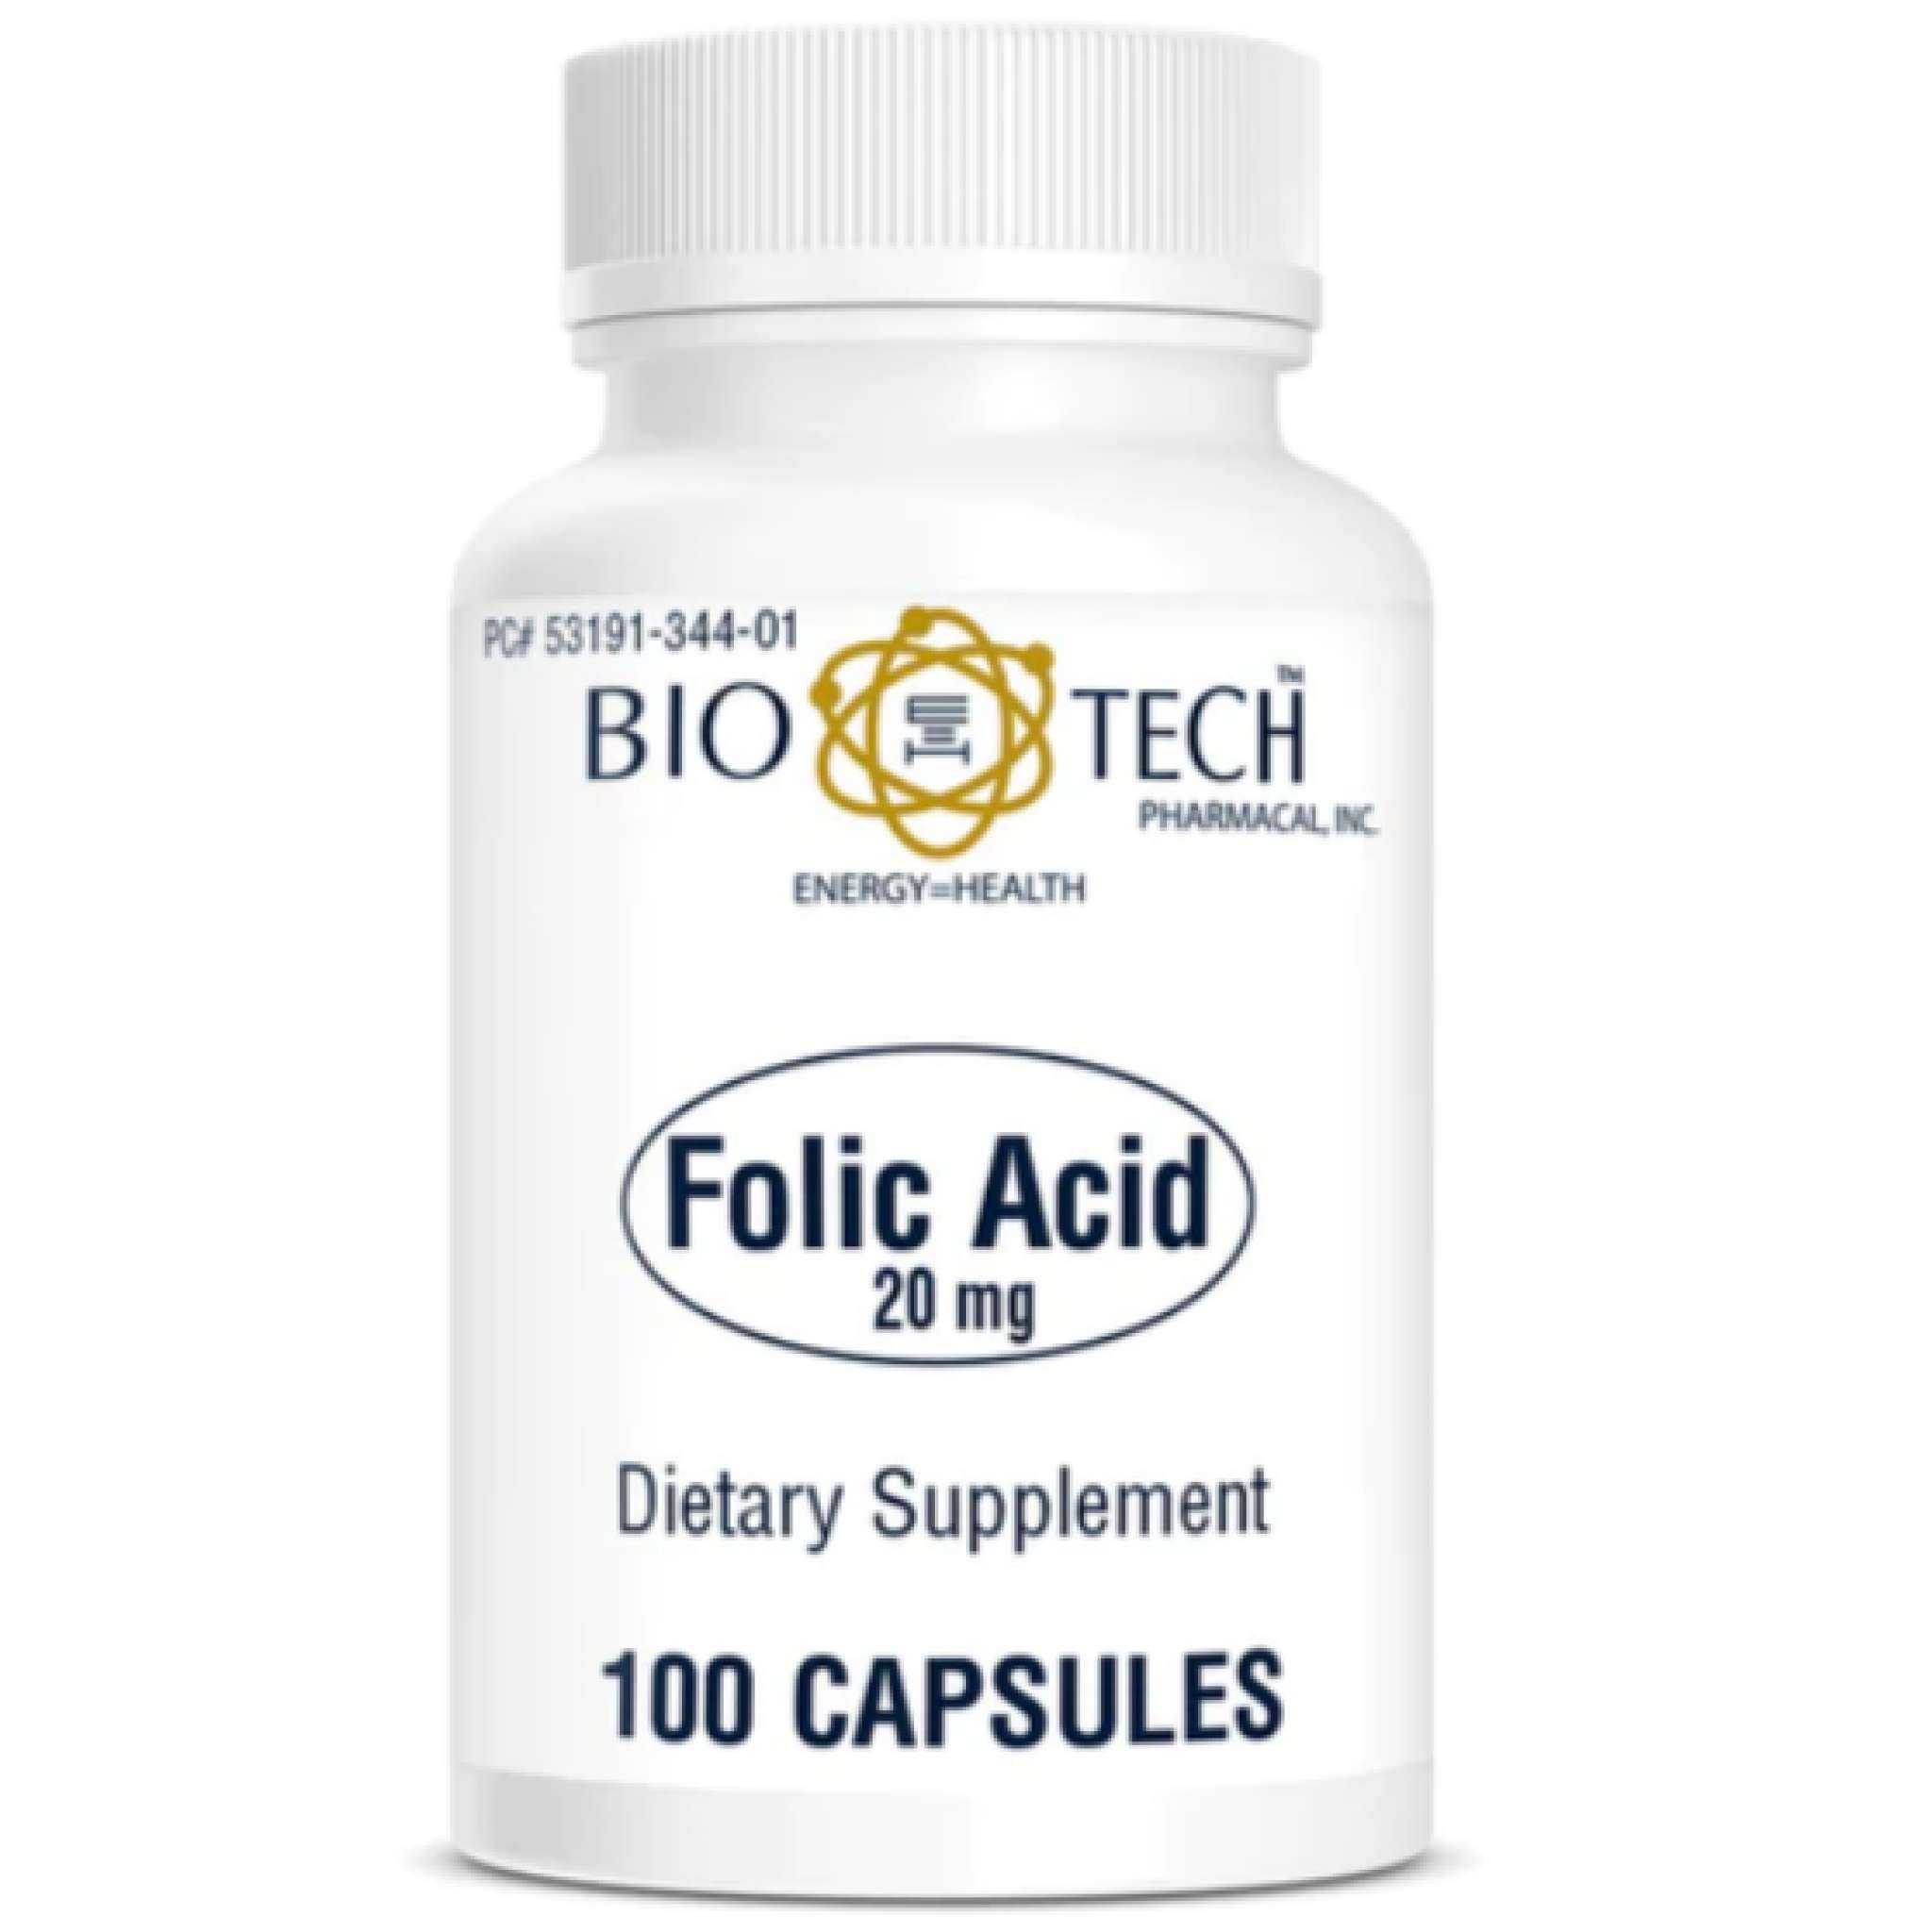 Bio Tech - Folic Acid 20 mg